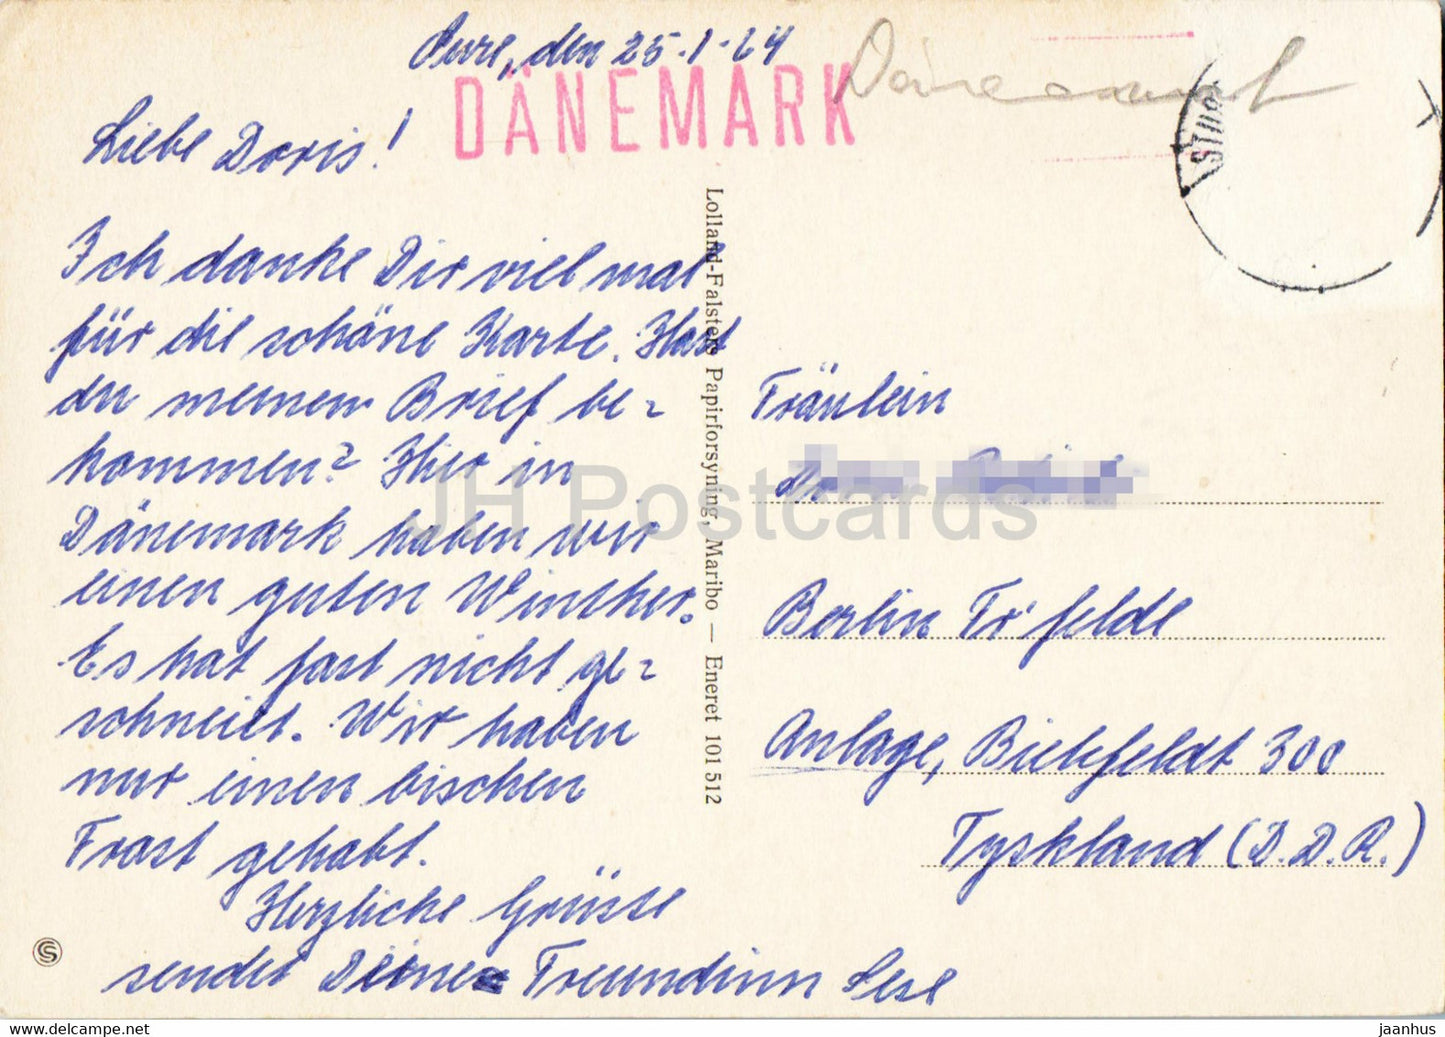 Rodby Havn – Strand – alte Postkarte – 1964 – Dänemark – gebraucht